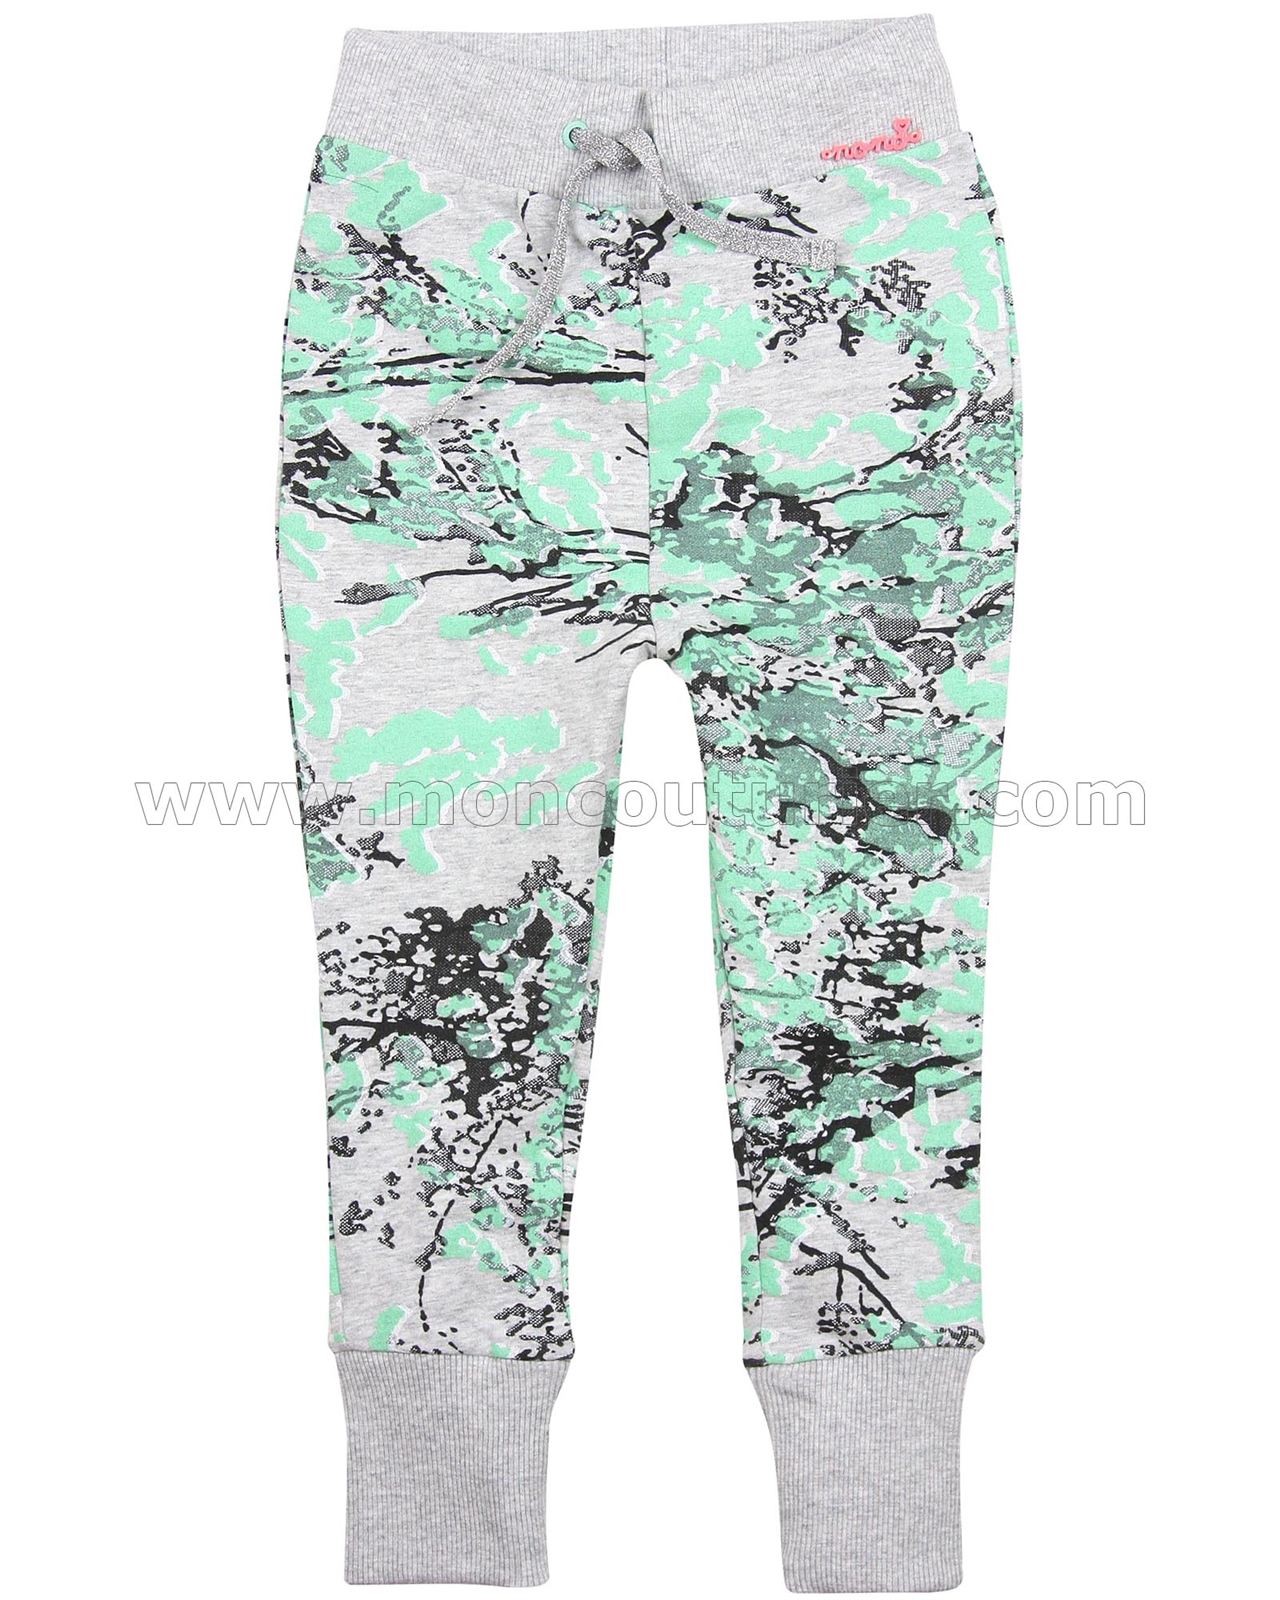 Sizes 3-8 Nono Girls Printed Sweatpants 